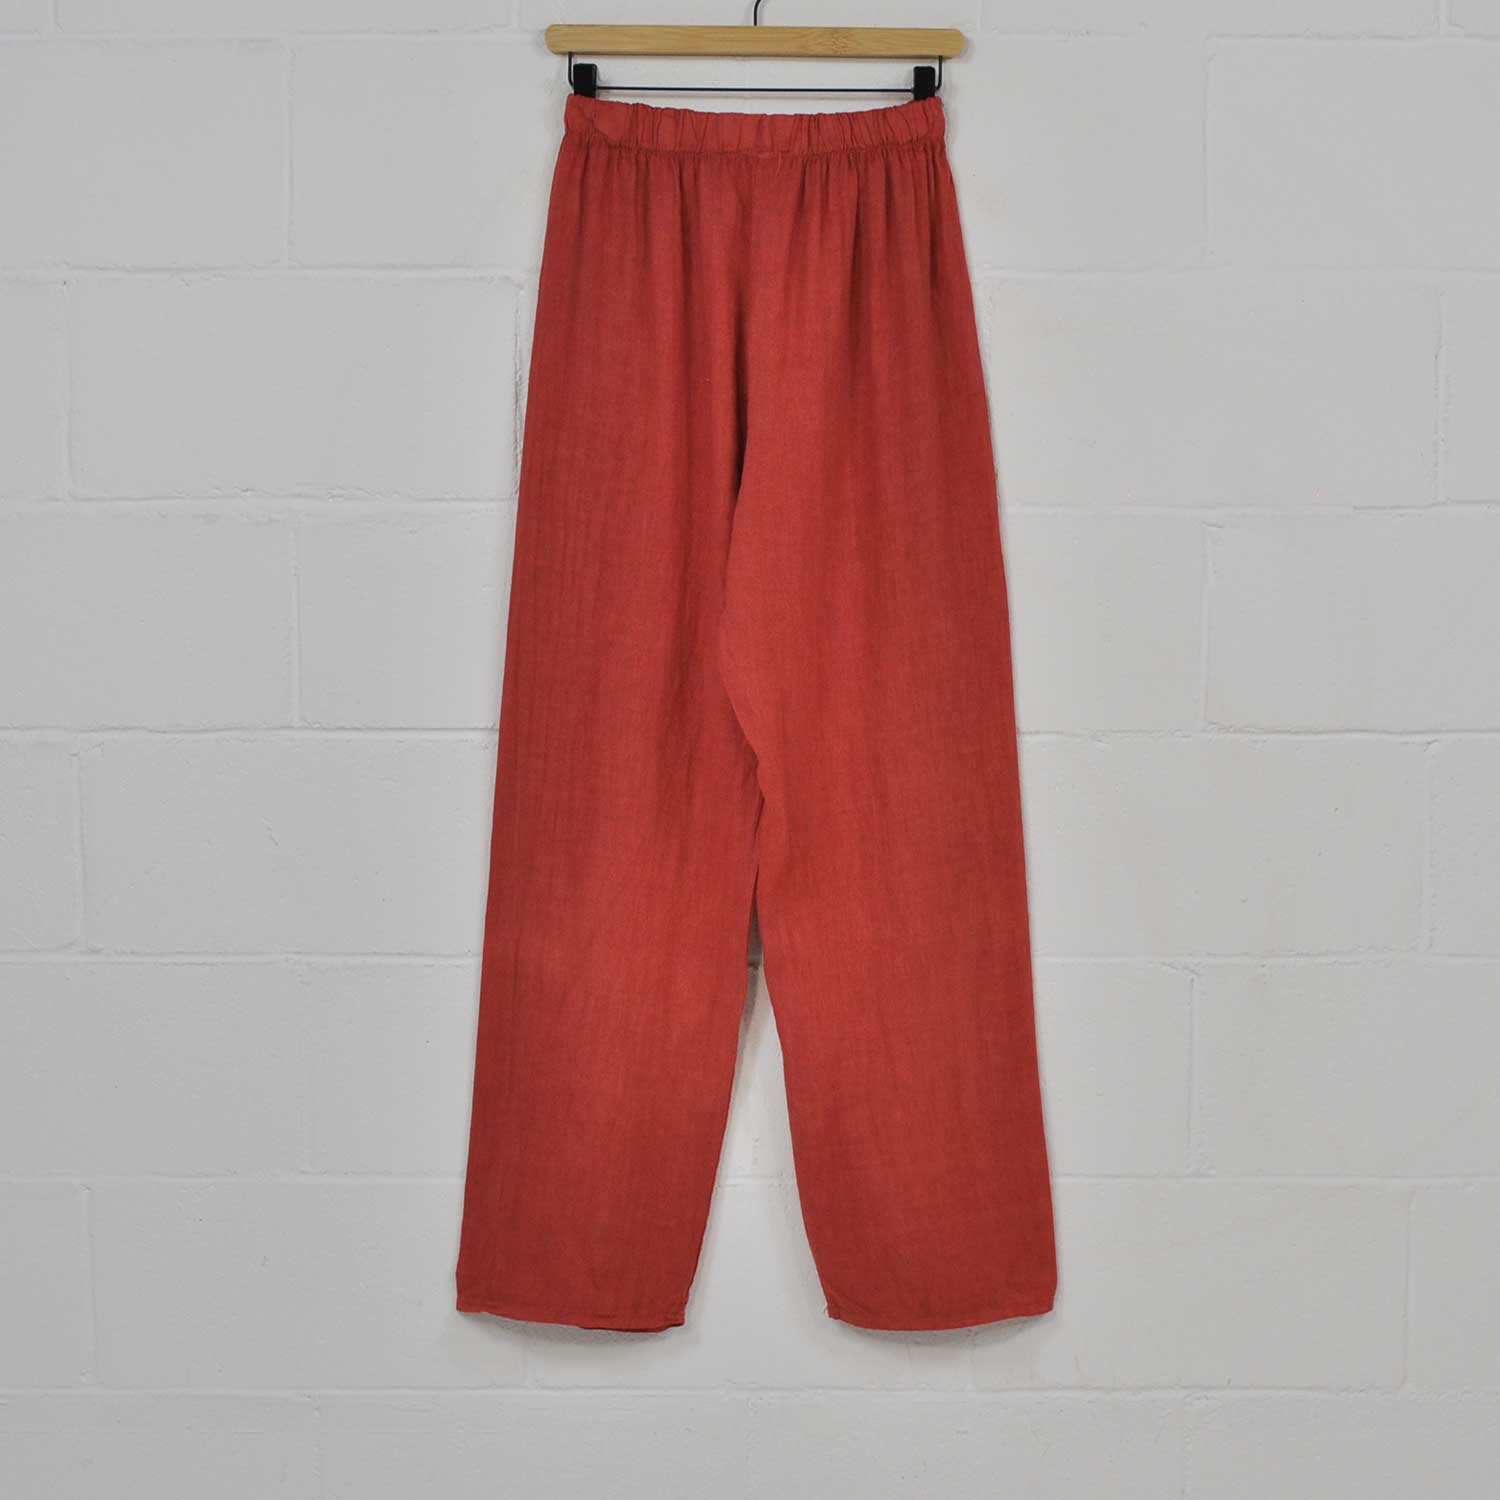 Red wide linen pants